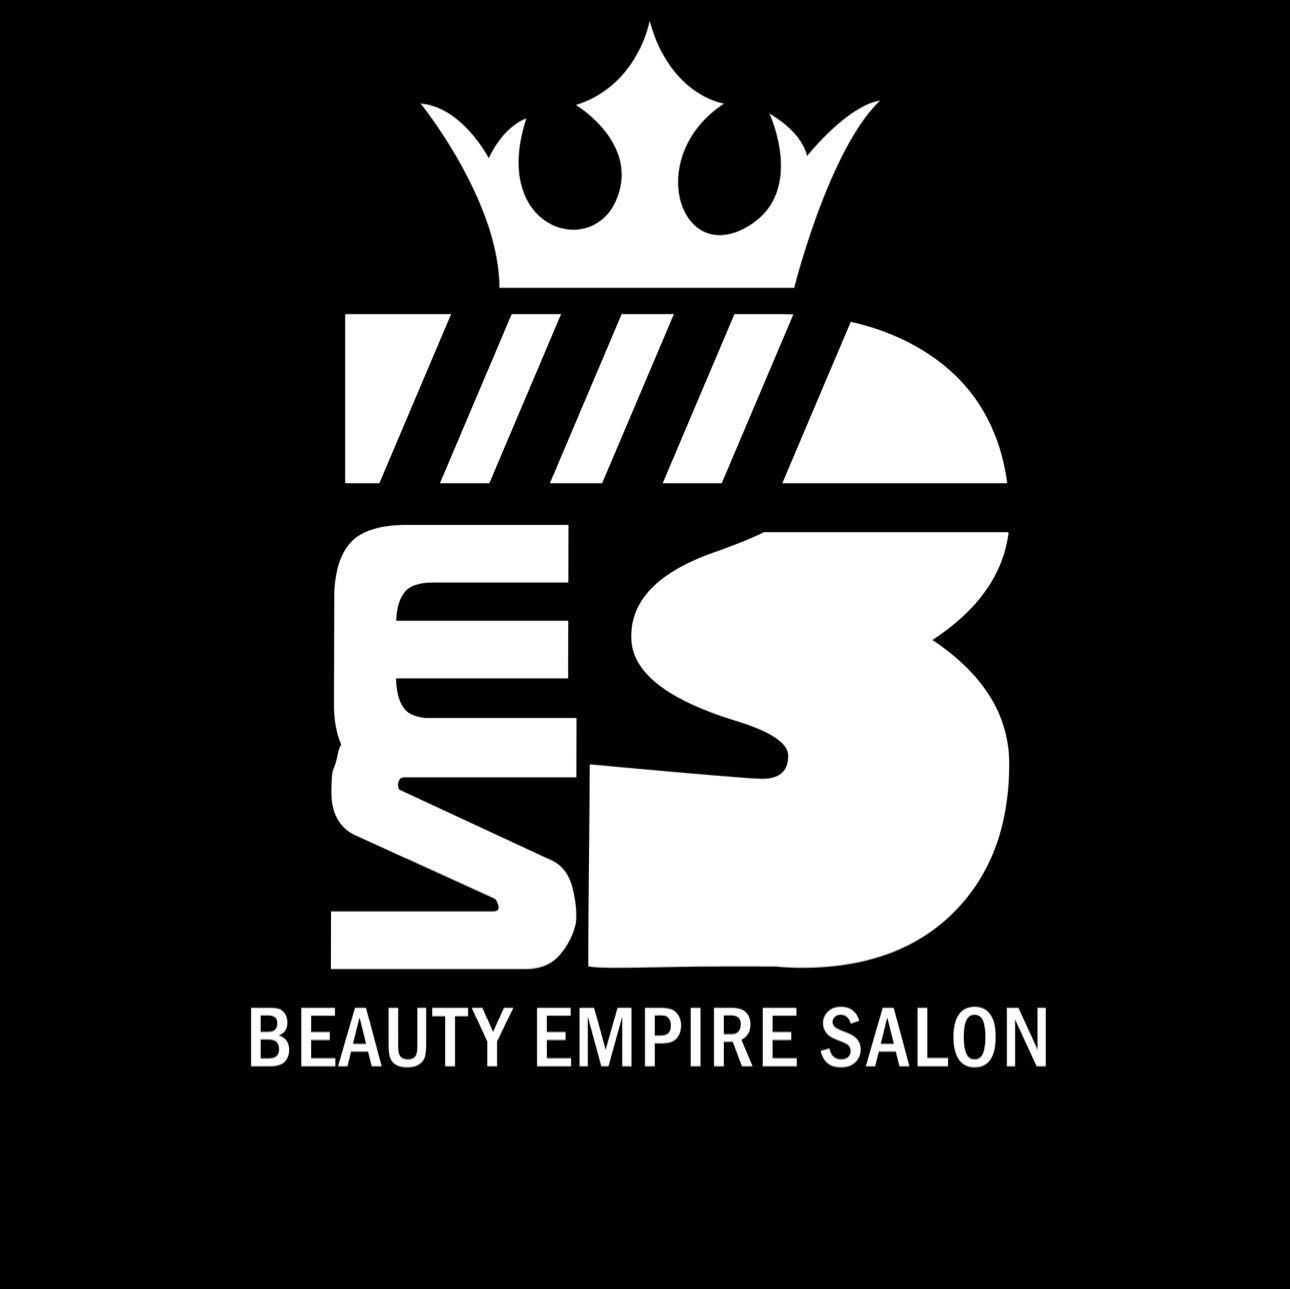 Beauty empire salon, 6500 Old Waterloo Rd, #2, Elkridge, 21075